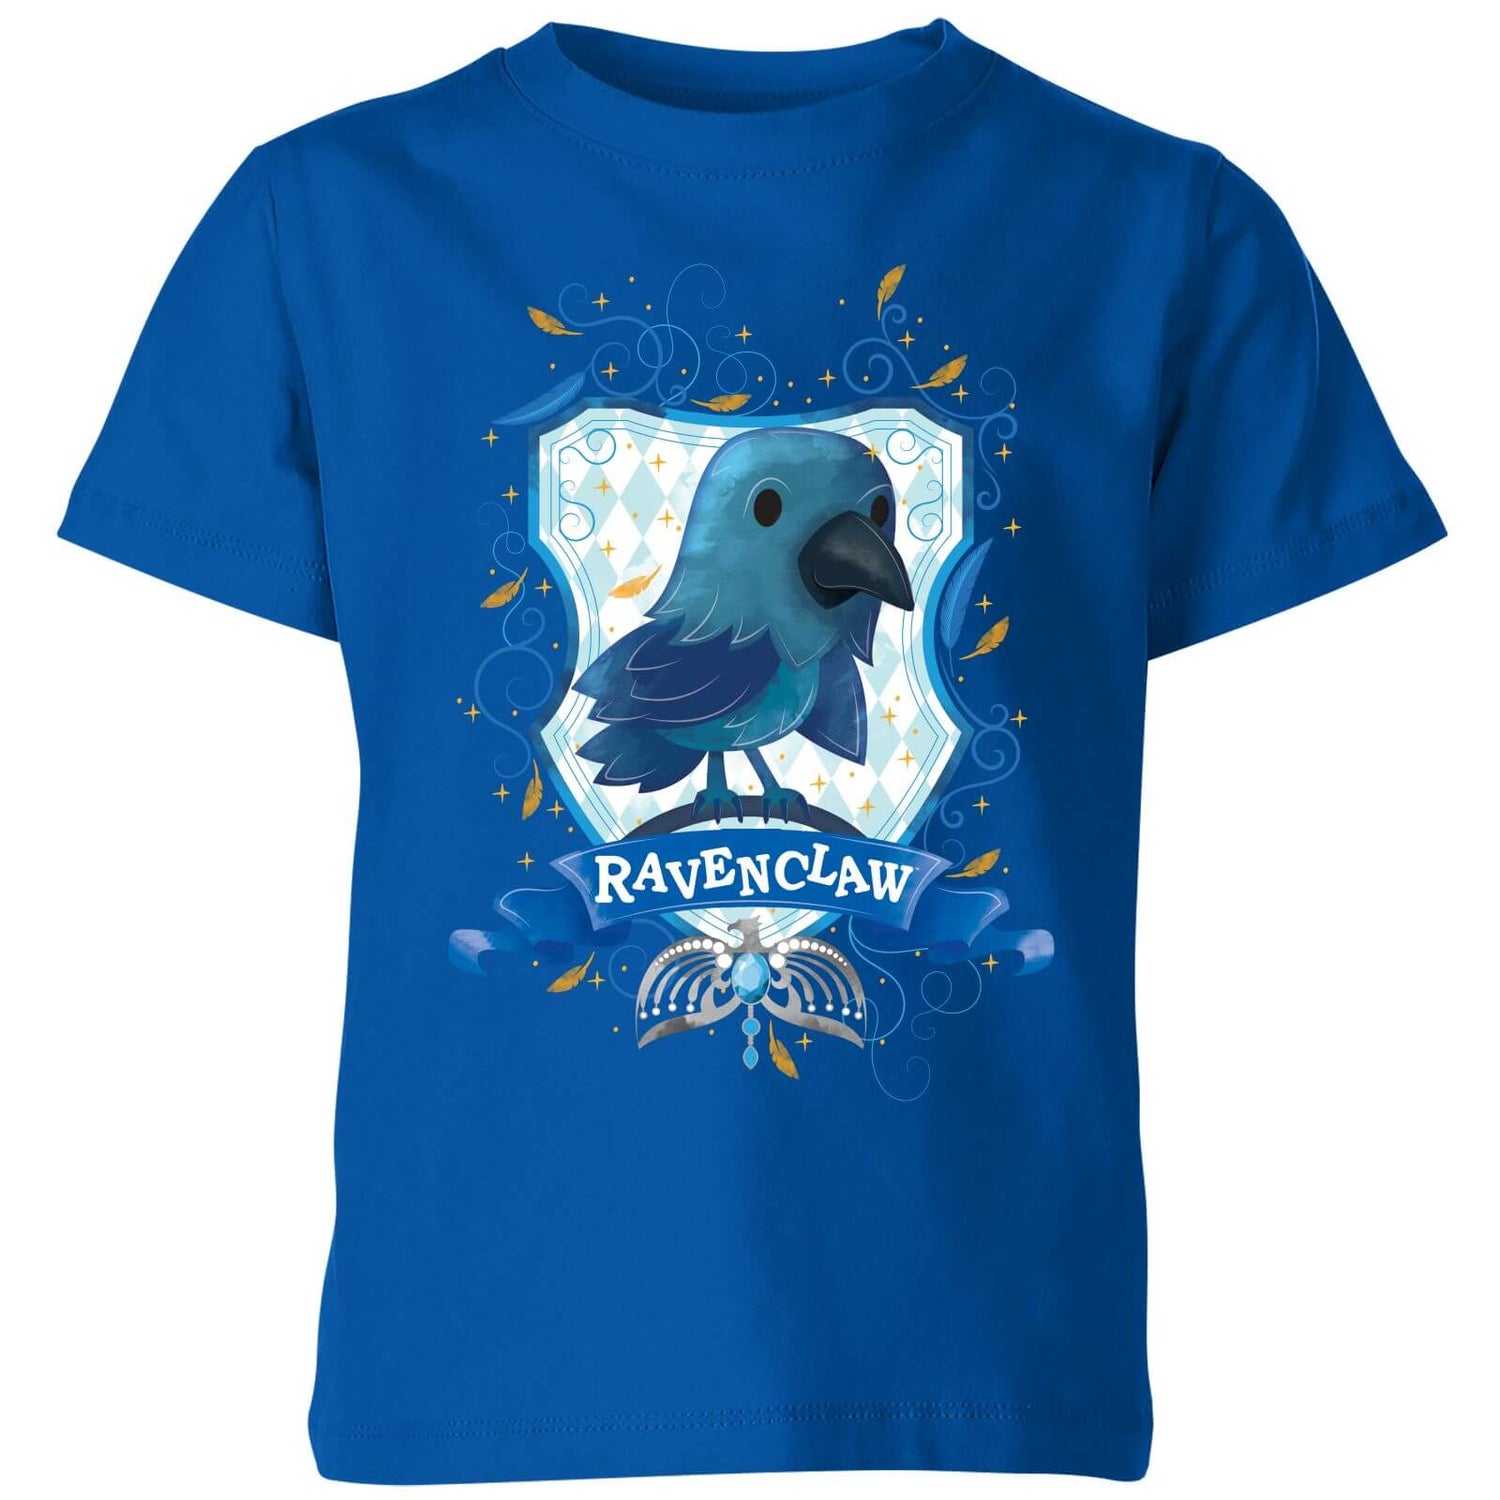 Camiseta para niño Ravenclaw de Harry Potter - Azul